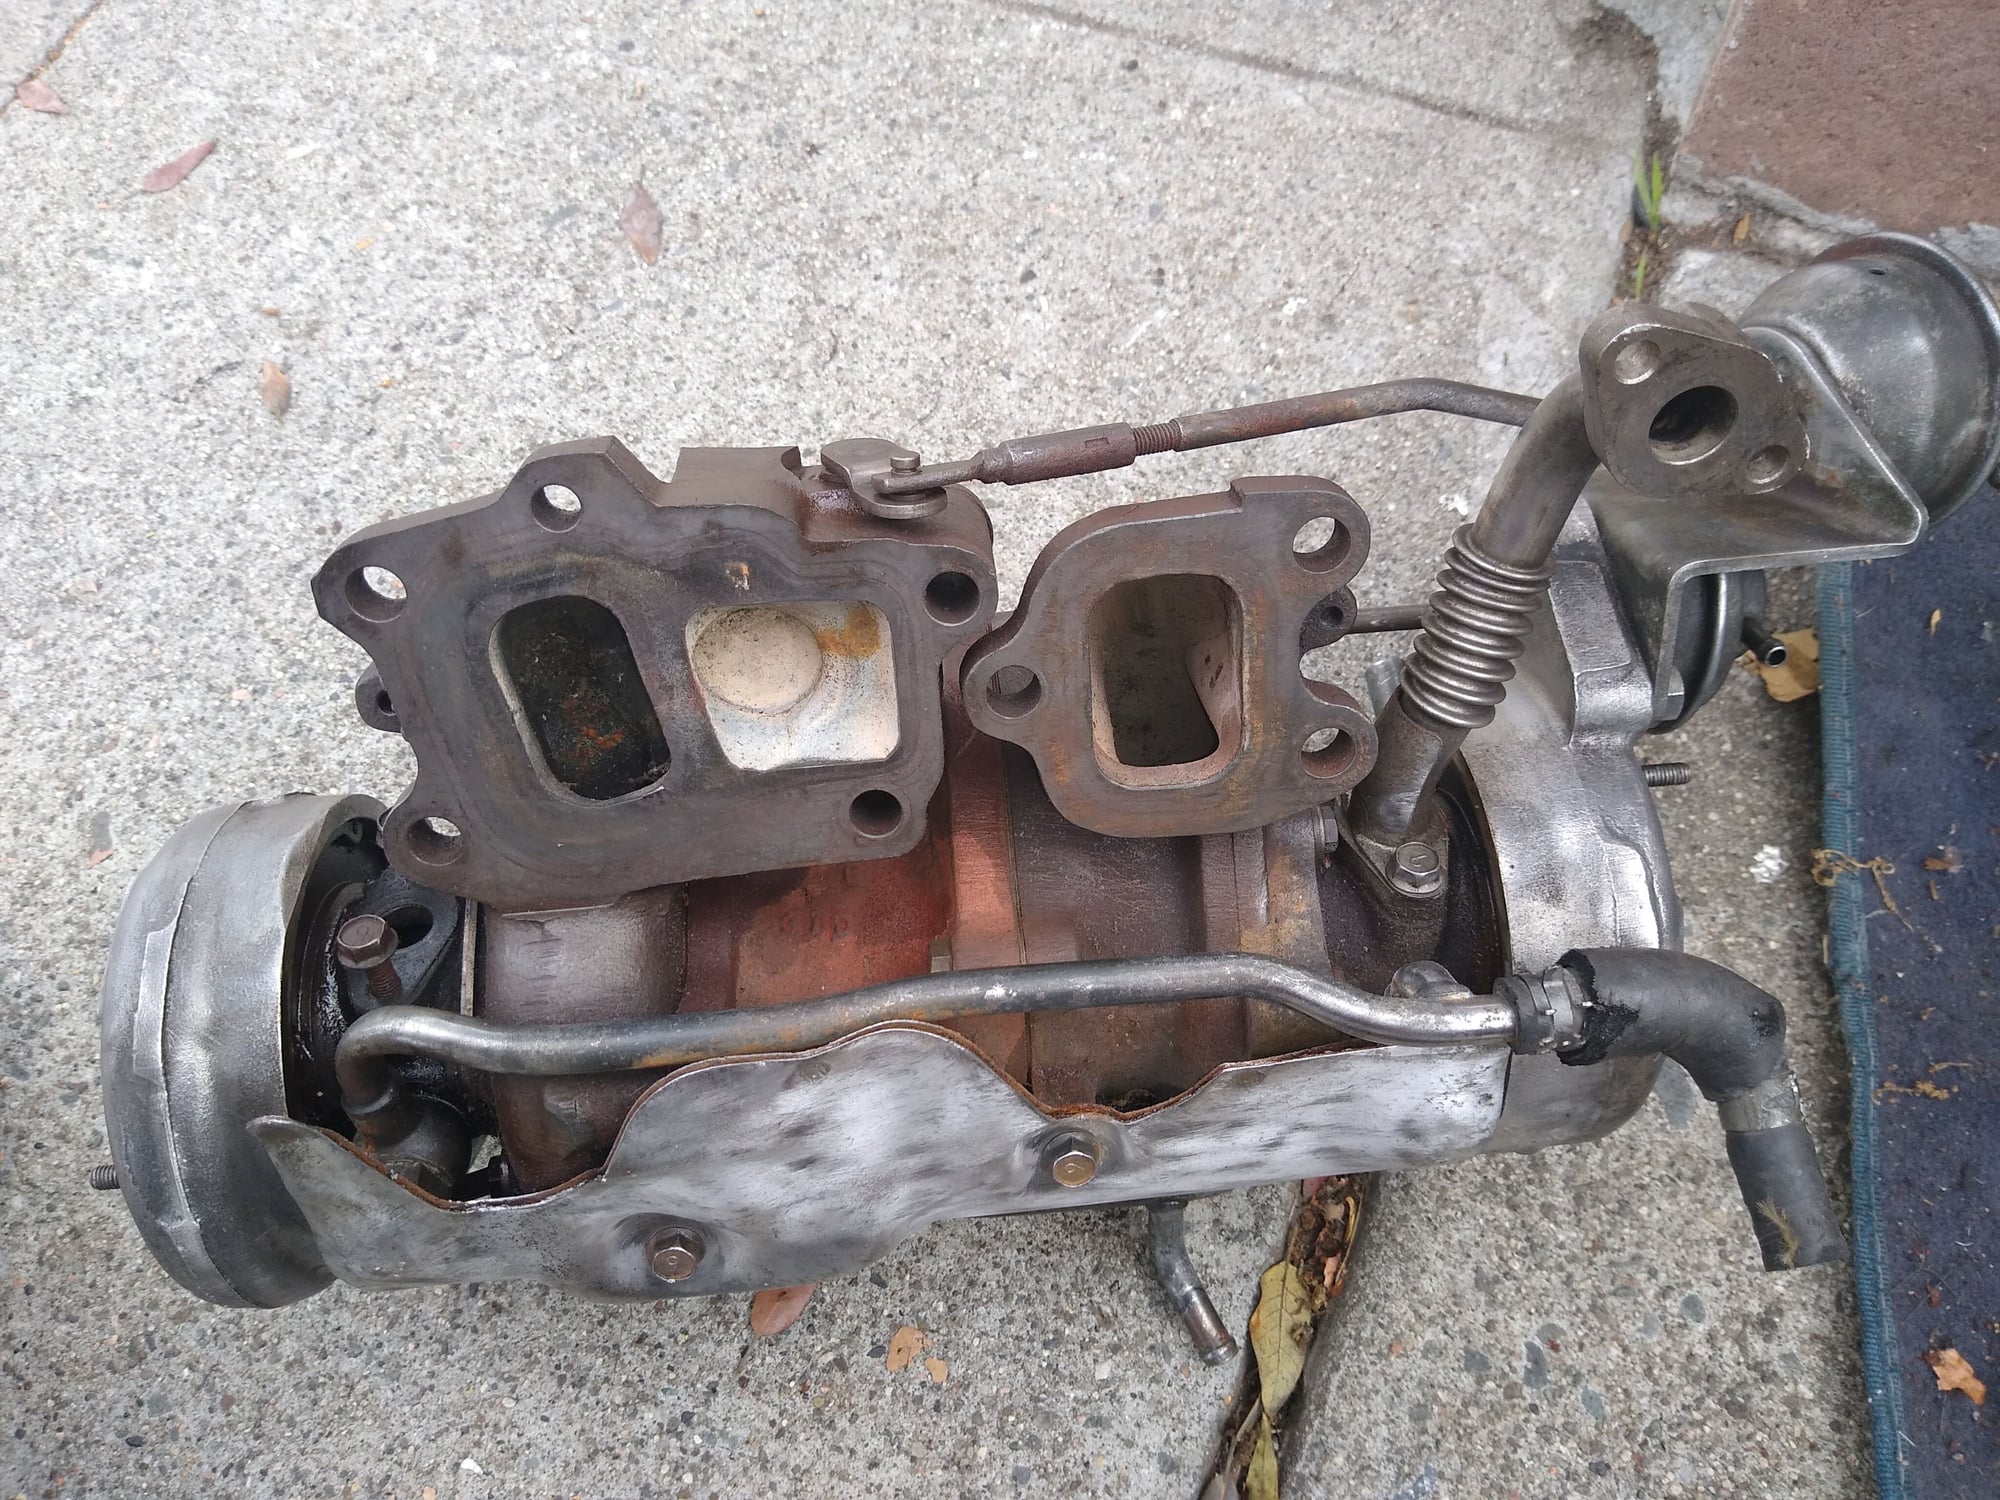 Engine - Internals - FD - OEM Twin Turbo Manifold - Used - 1993 to 1995 Mazda RX-7 - San Jose, CA 95121, United States